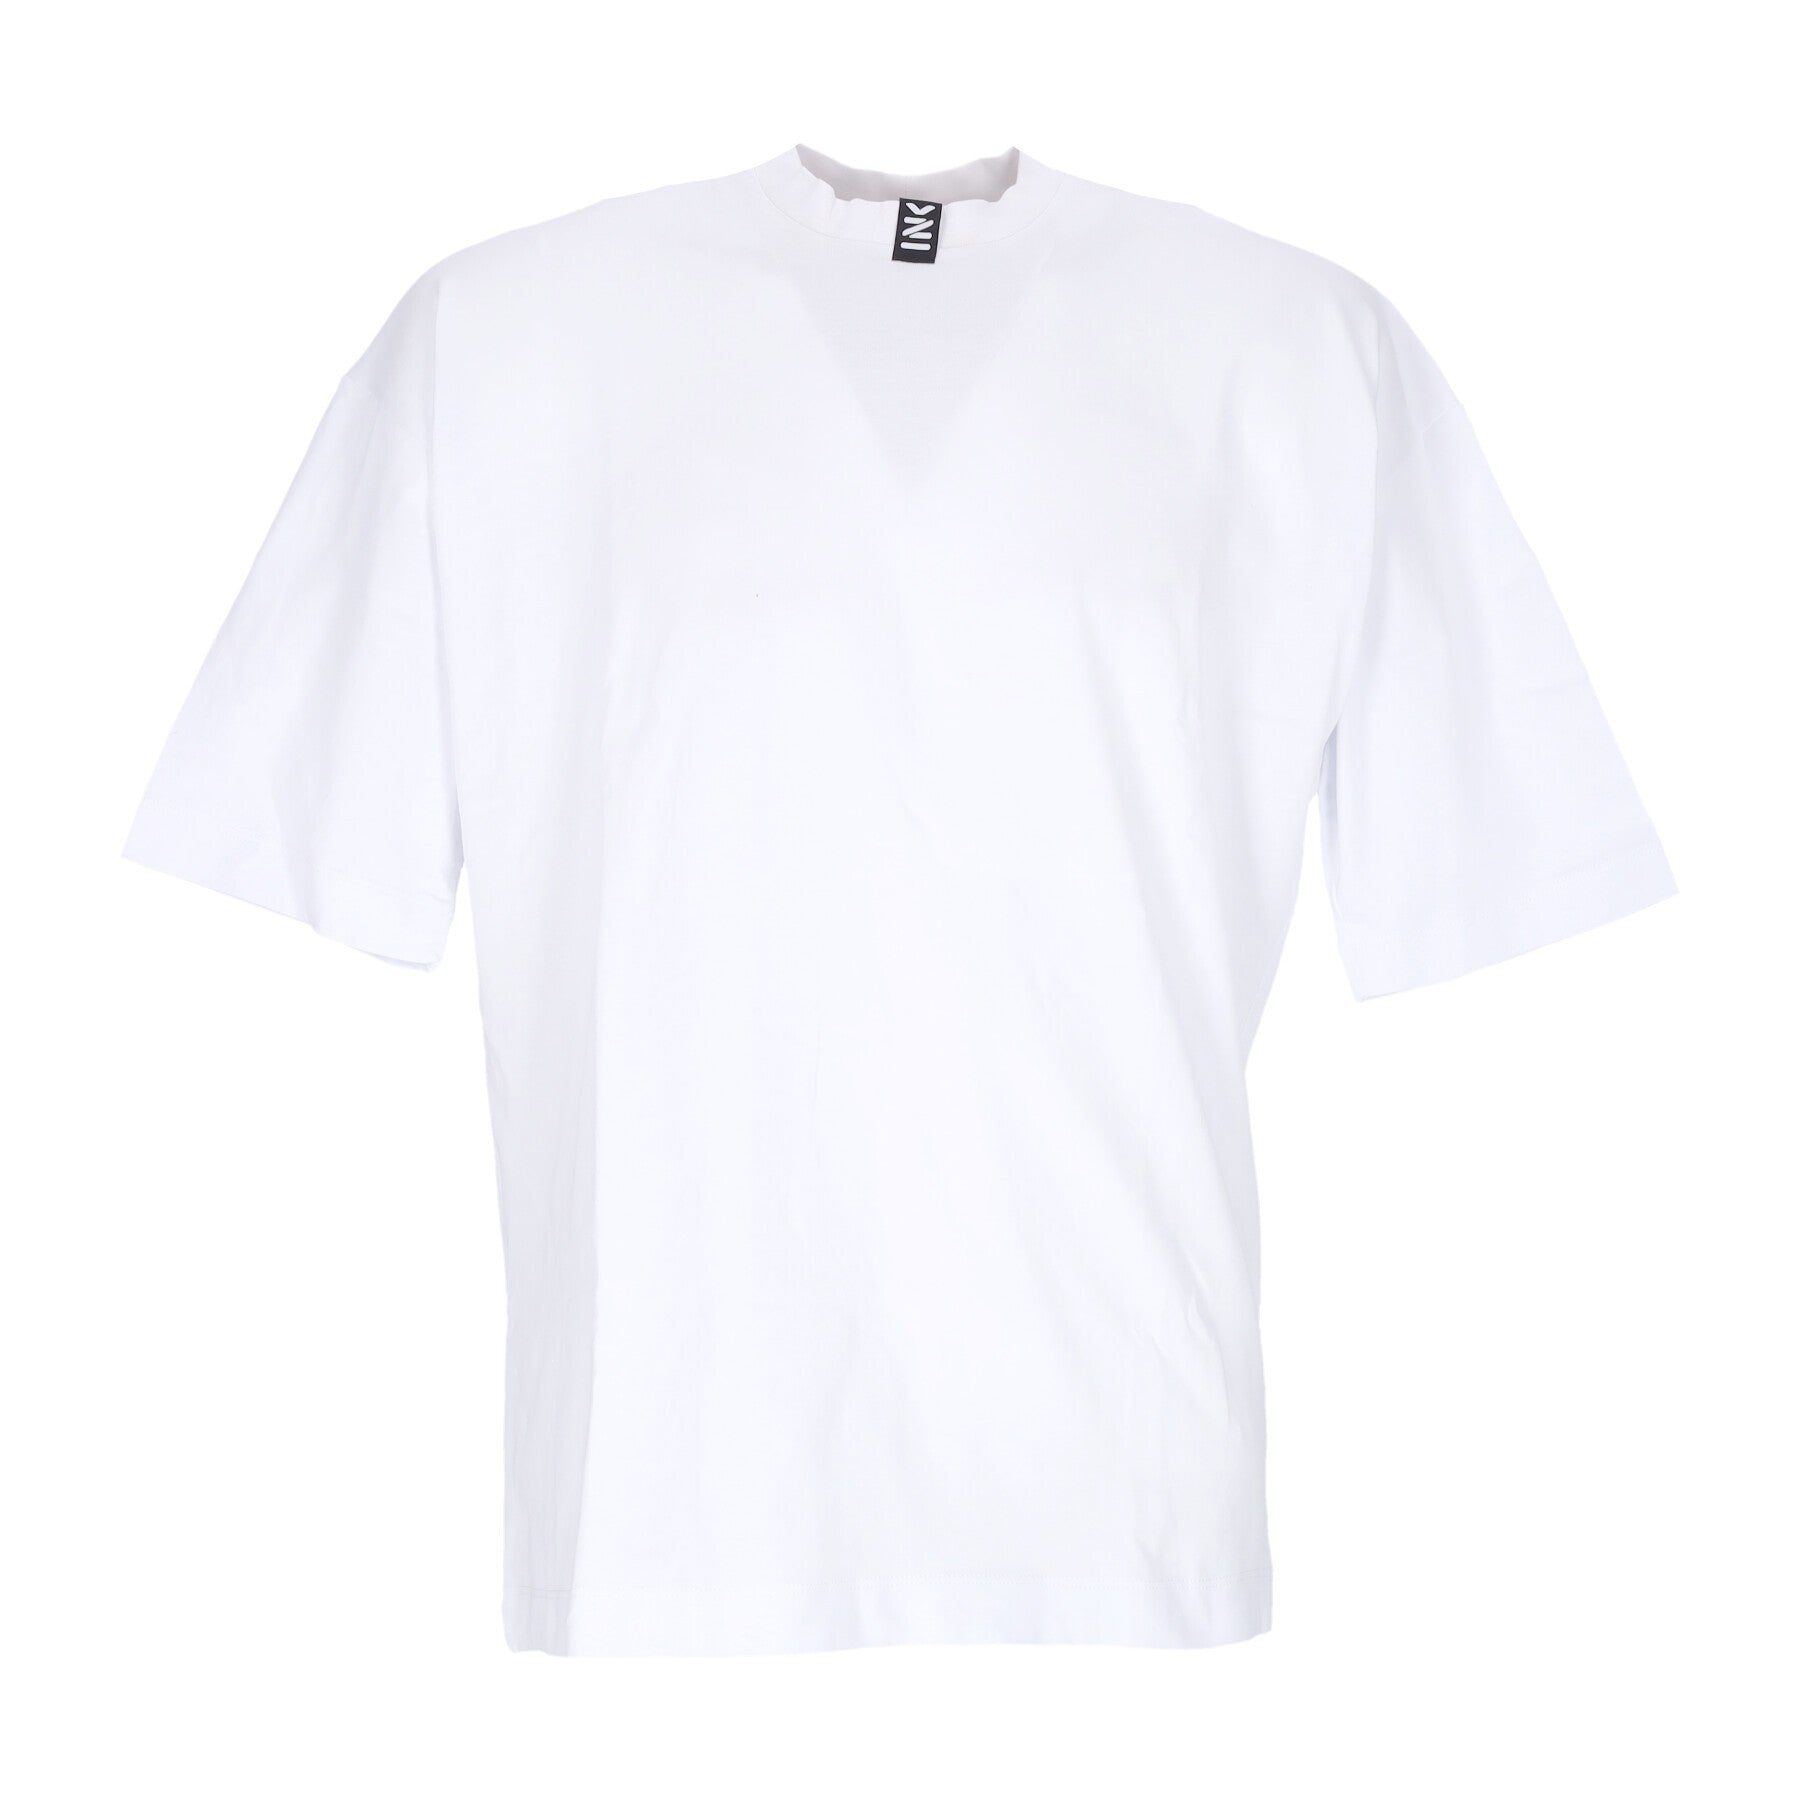 London T2 White Men's T-Shirt